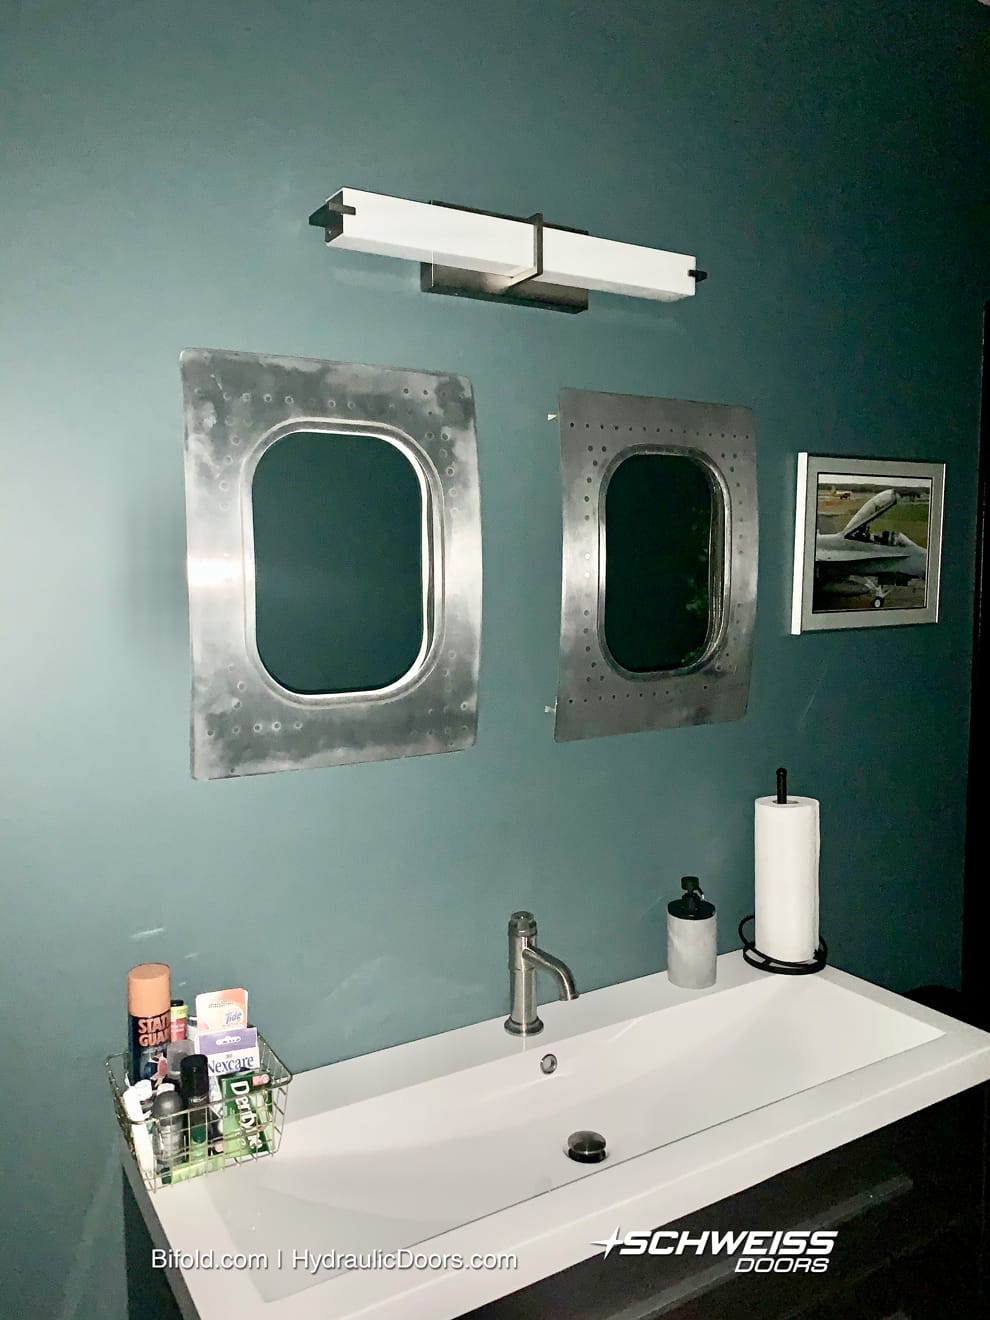 Aircraft windows repurposed as bathroom mirrors